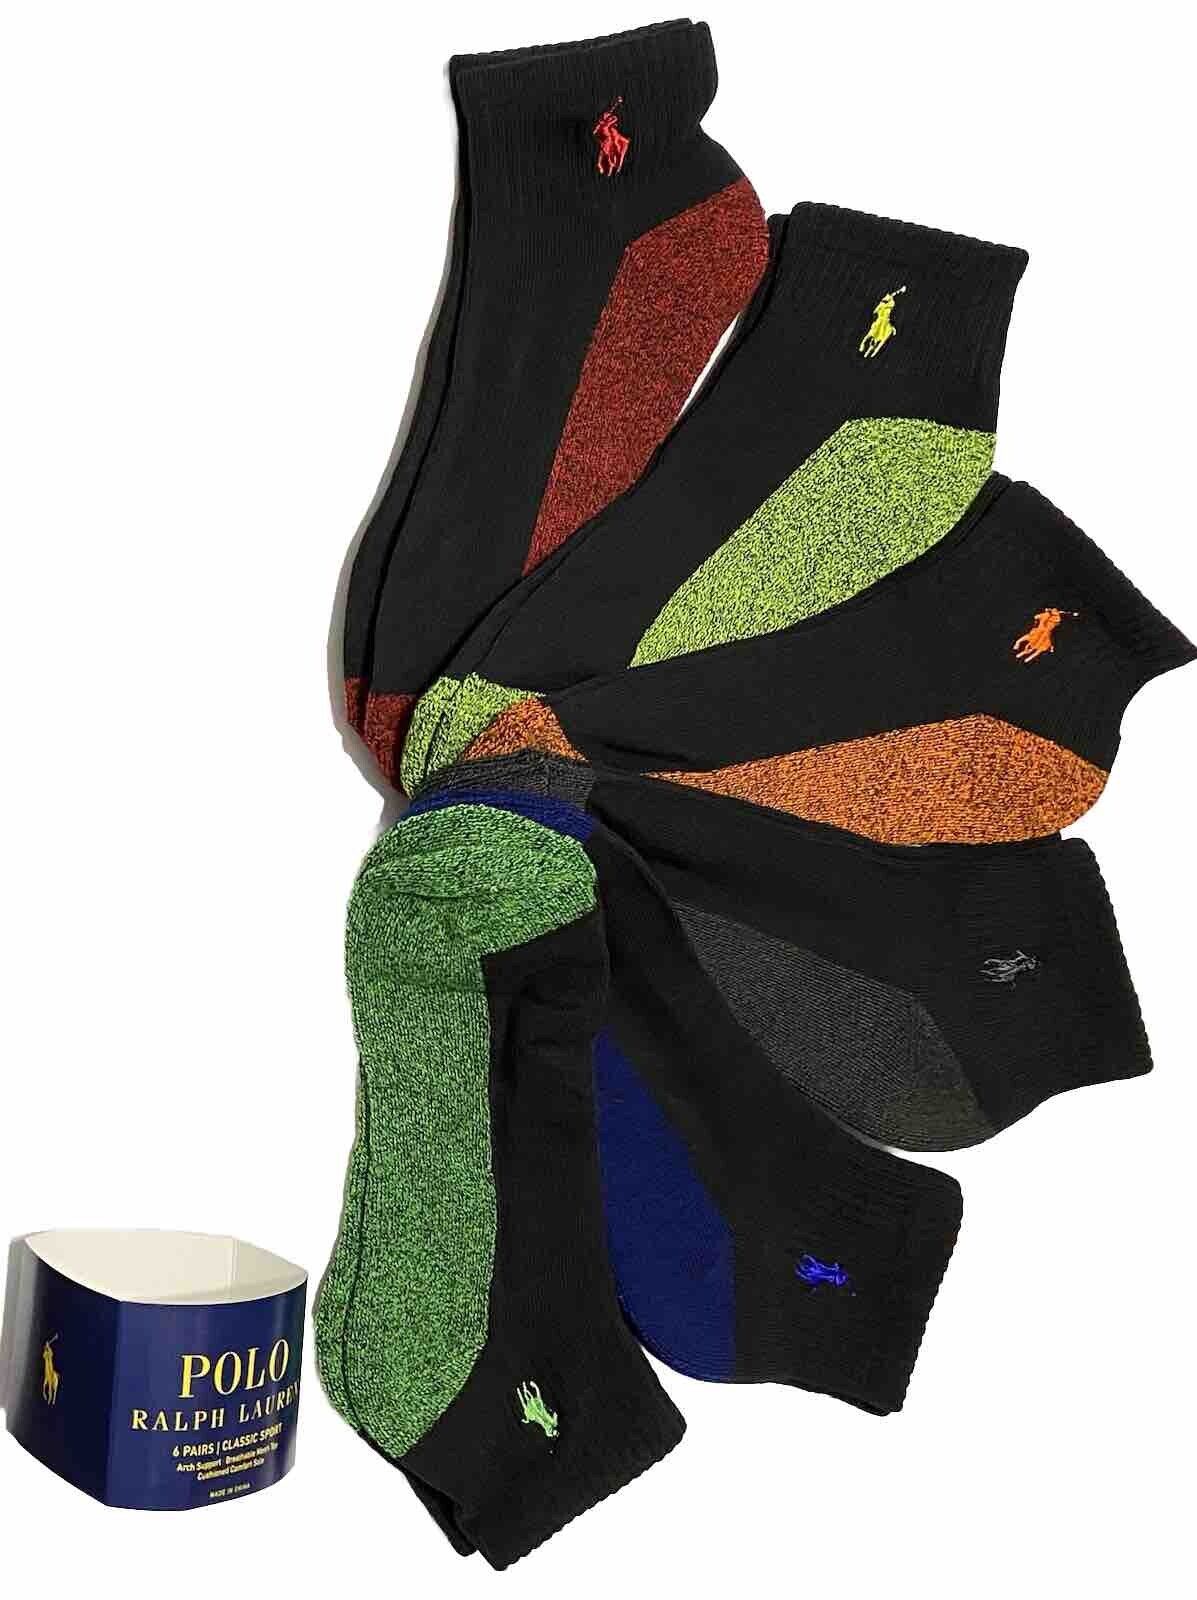 Polo Ralph Lauren Classic Sport 6-Pair Men\'s Quarter Cut Socks Assorted 5557